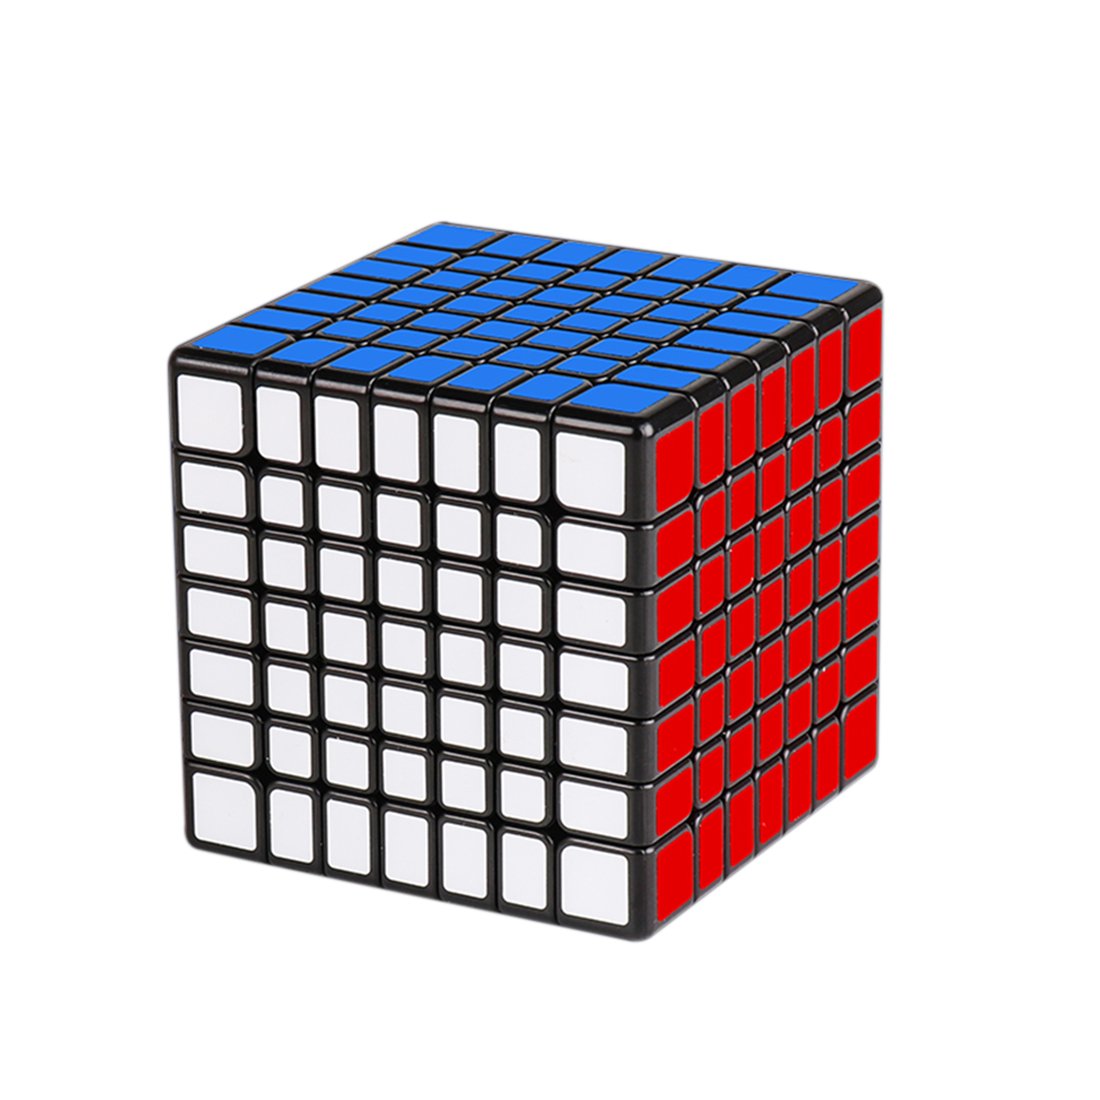 YJ8262 Moyu Aofu GTSM 7x7x7 Magic Cube -Magnetic Version